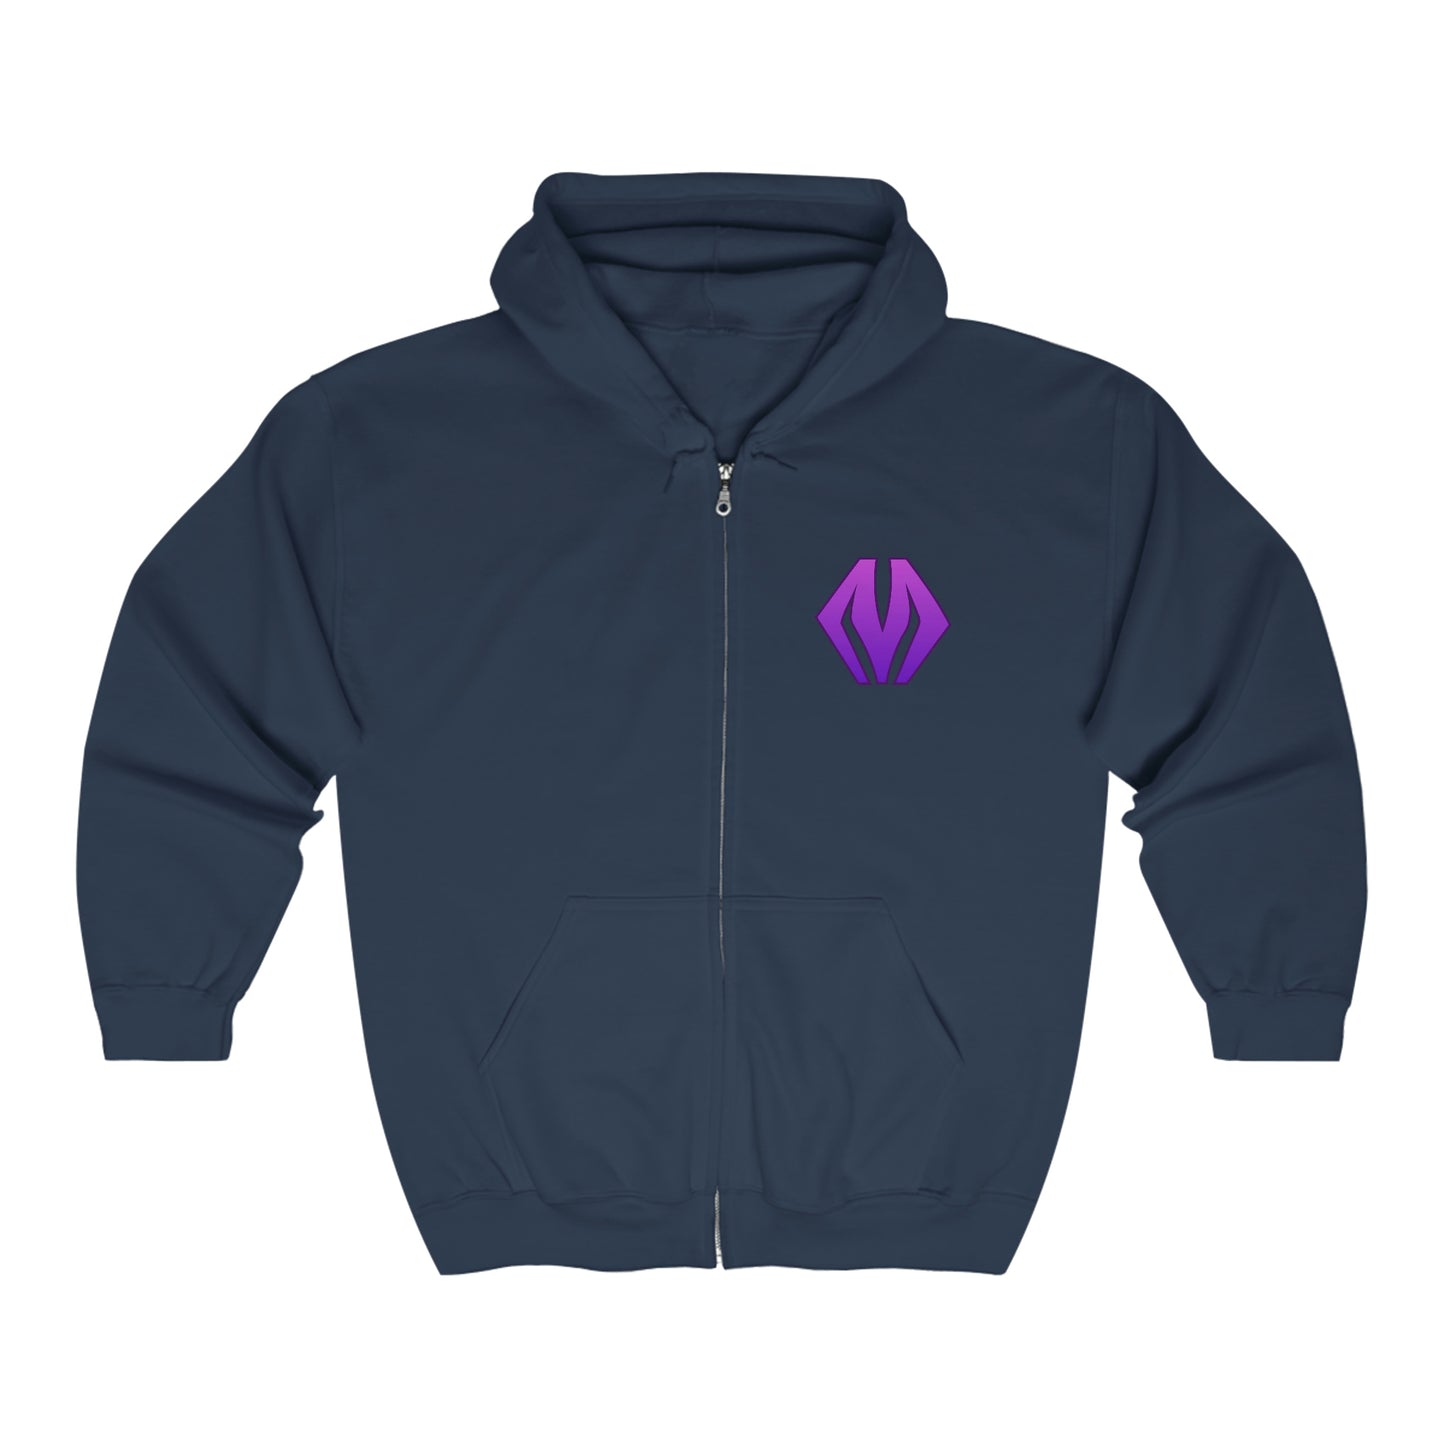 M logo / MA logo - Unisex Heavy Blend™ Full Zip Hooded Sweatshirt